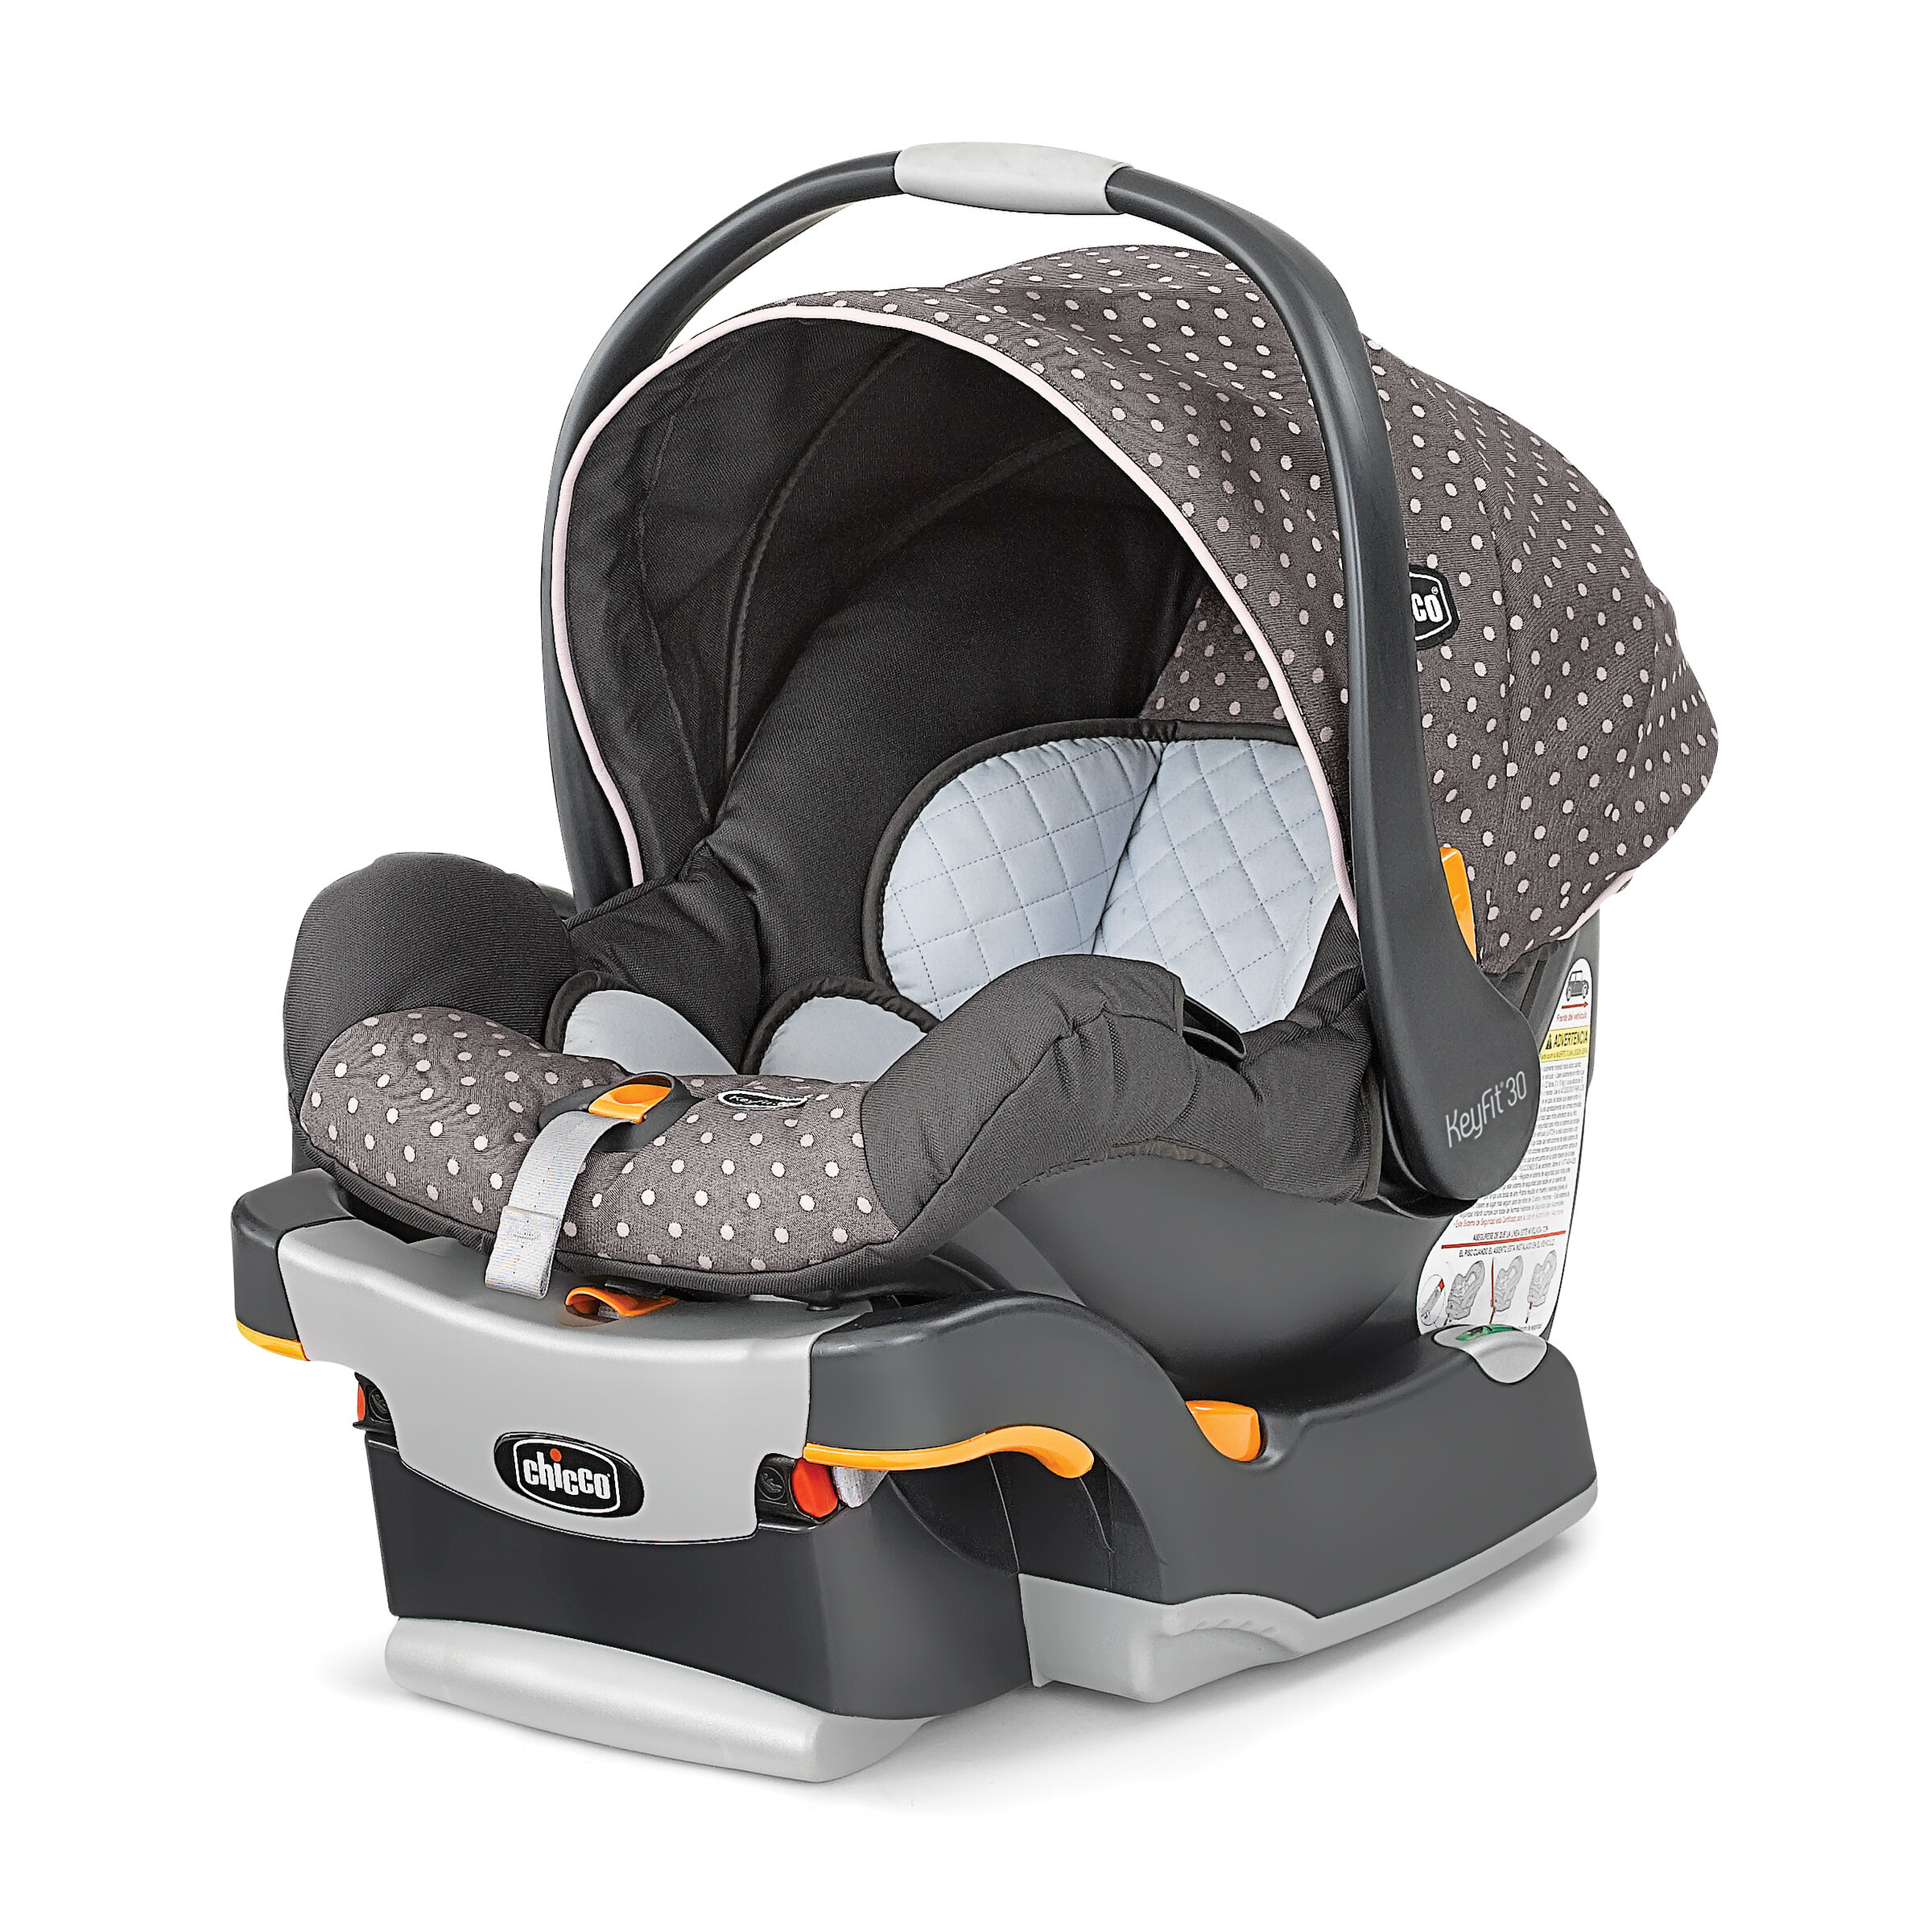 KeyFit30 Infant Car Seat - Lilla | Chicco